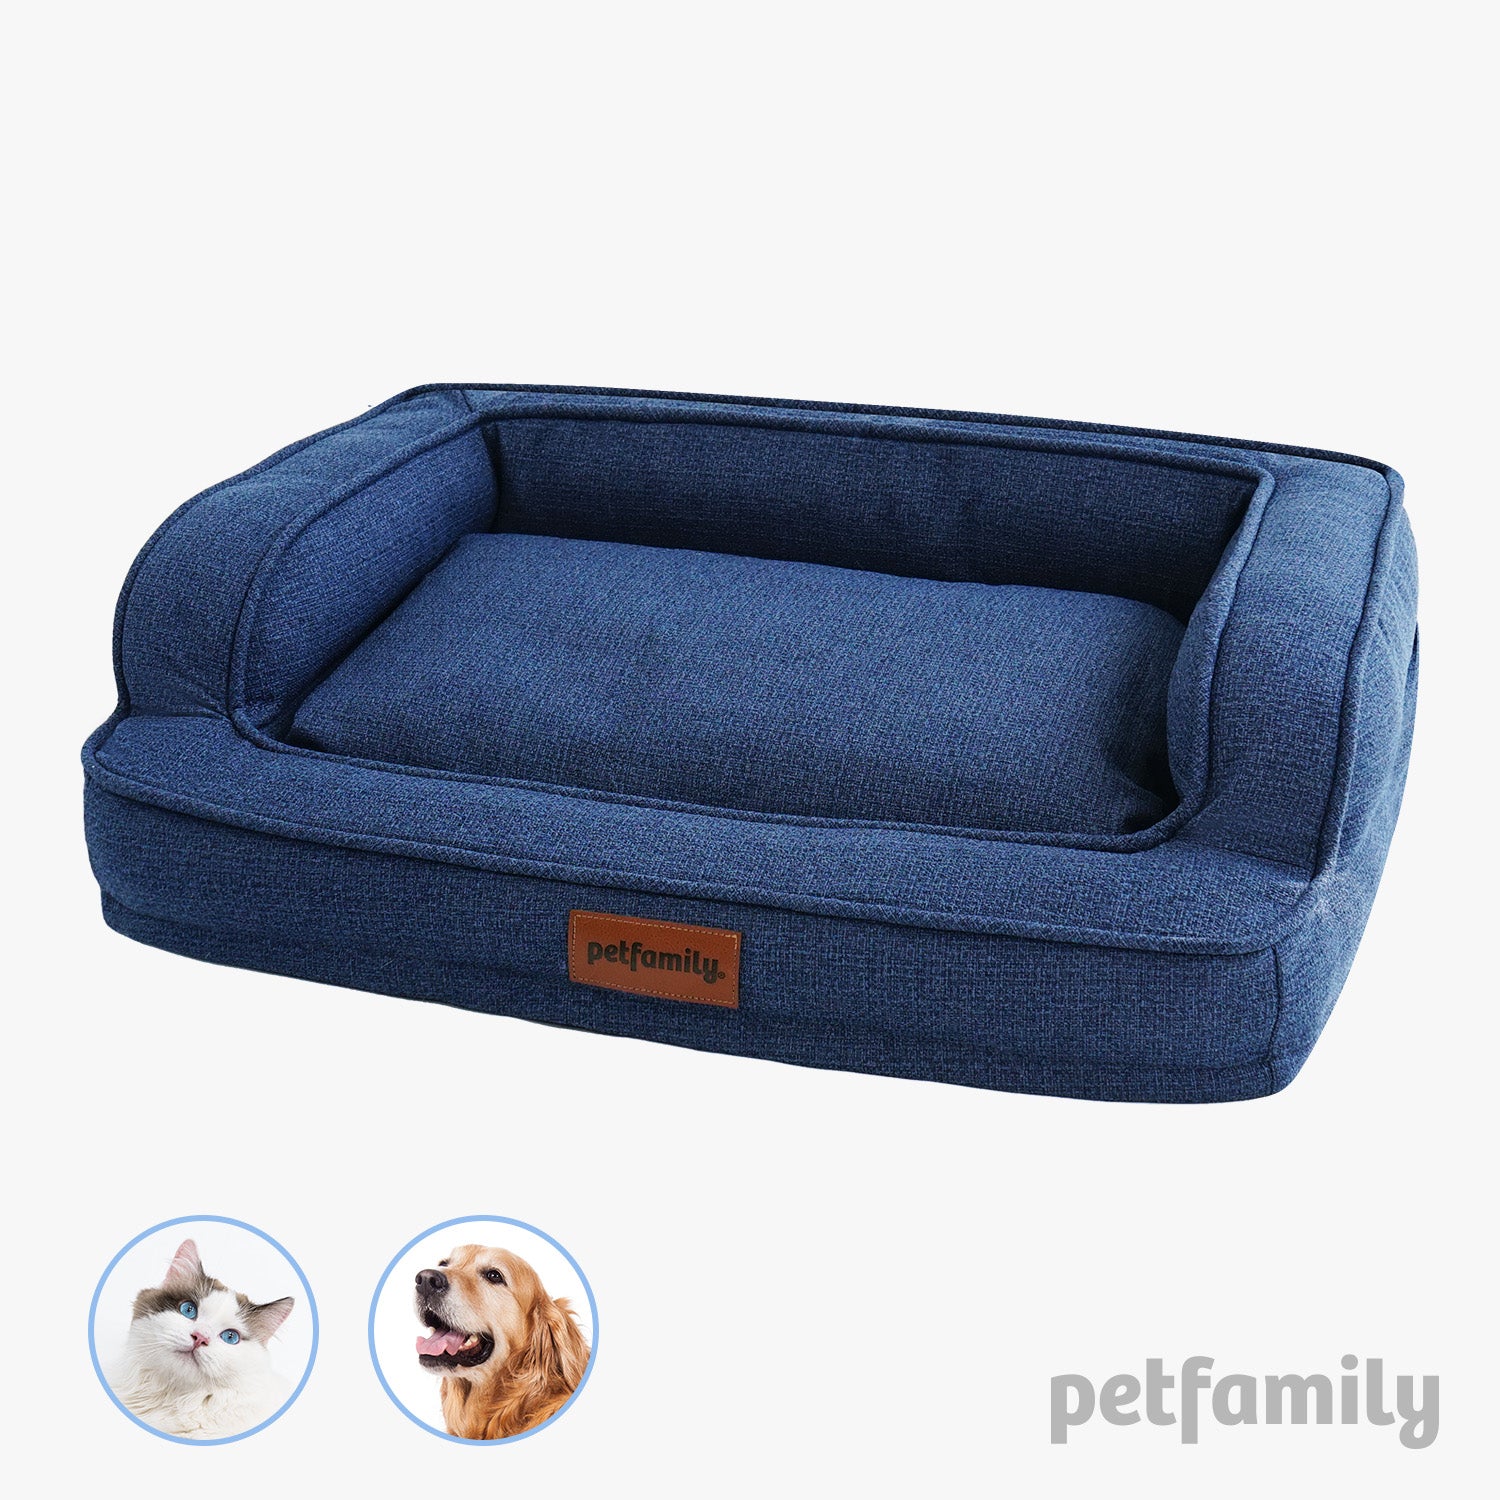 Luxury Dog Bed Cat Bed Pet Bed, Navy